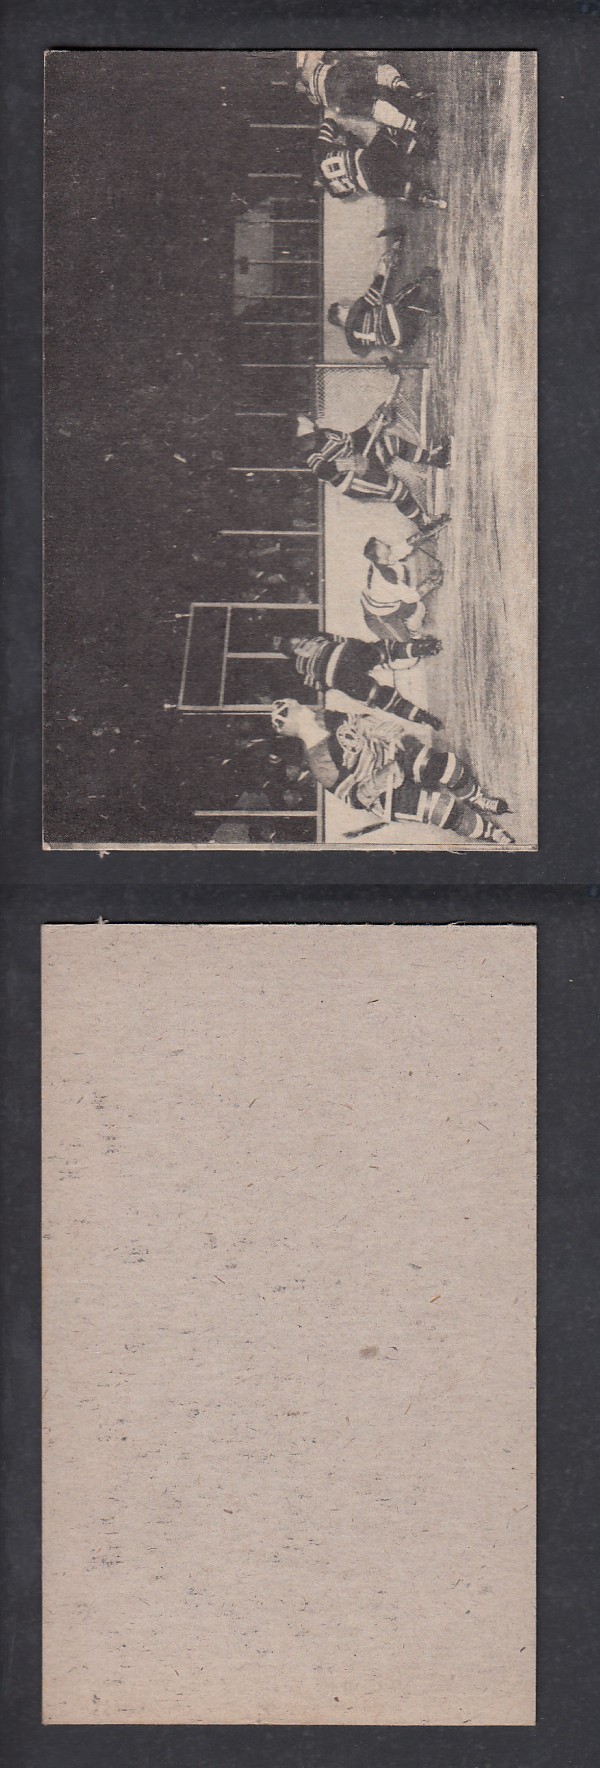 1948-52 EXHIBITS HOCKEY CARD 5 GEOFFRION photo